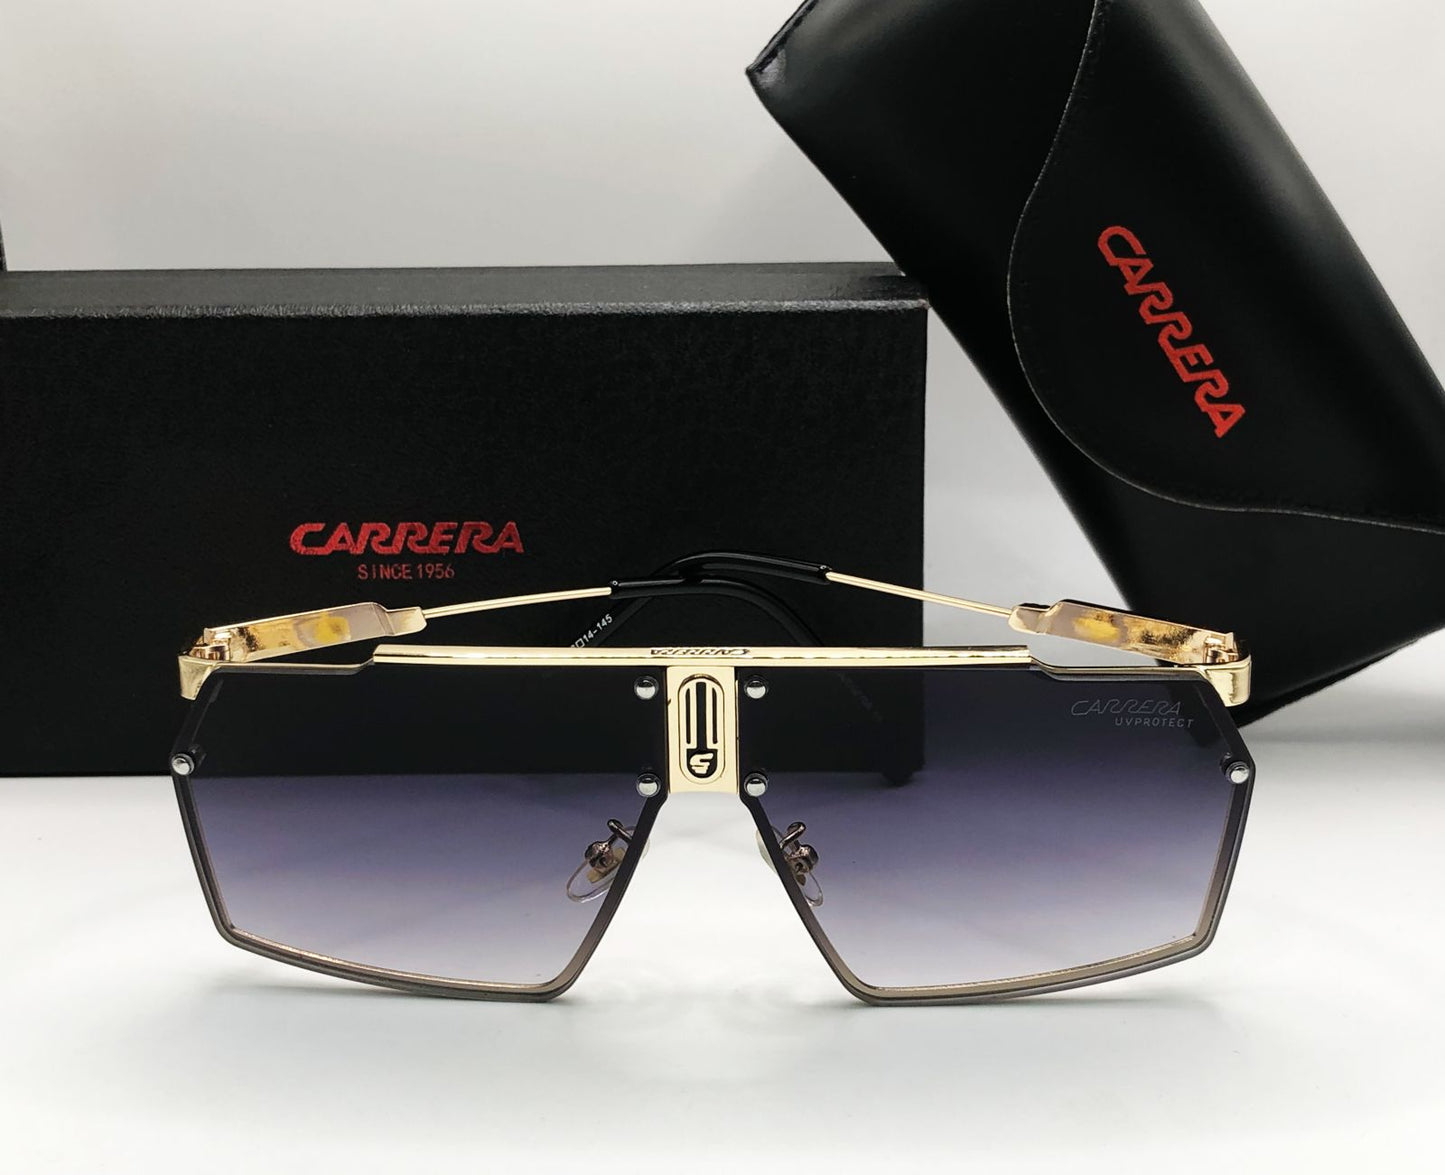 Carrera Hot Selling Sunglasses !